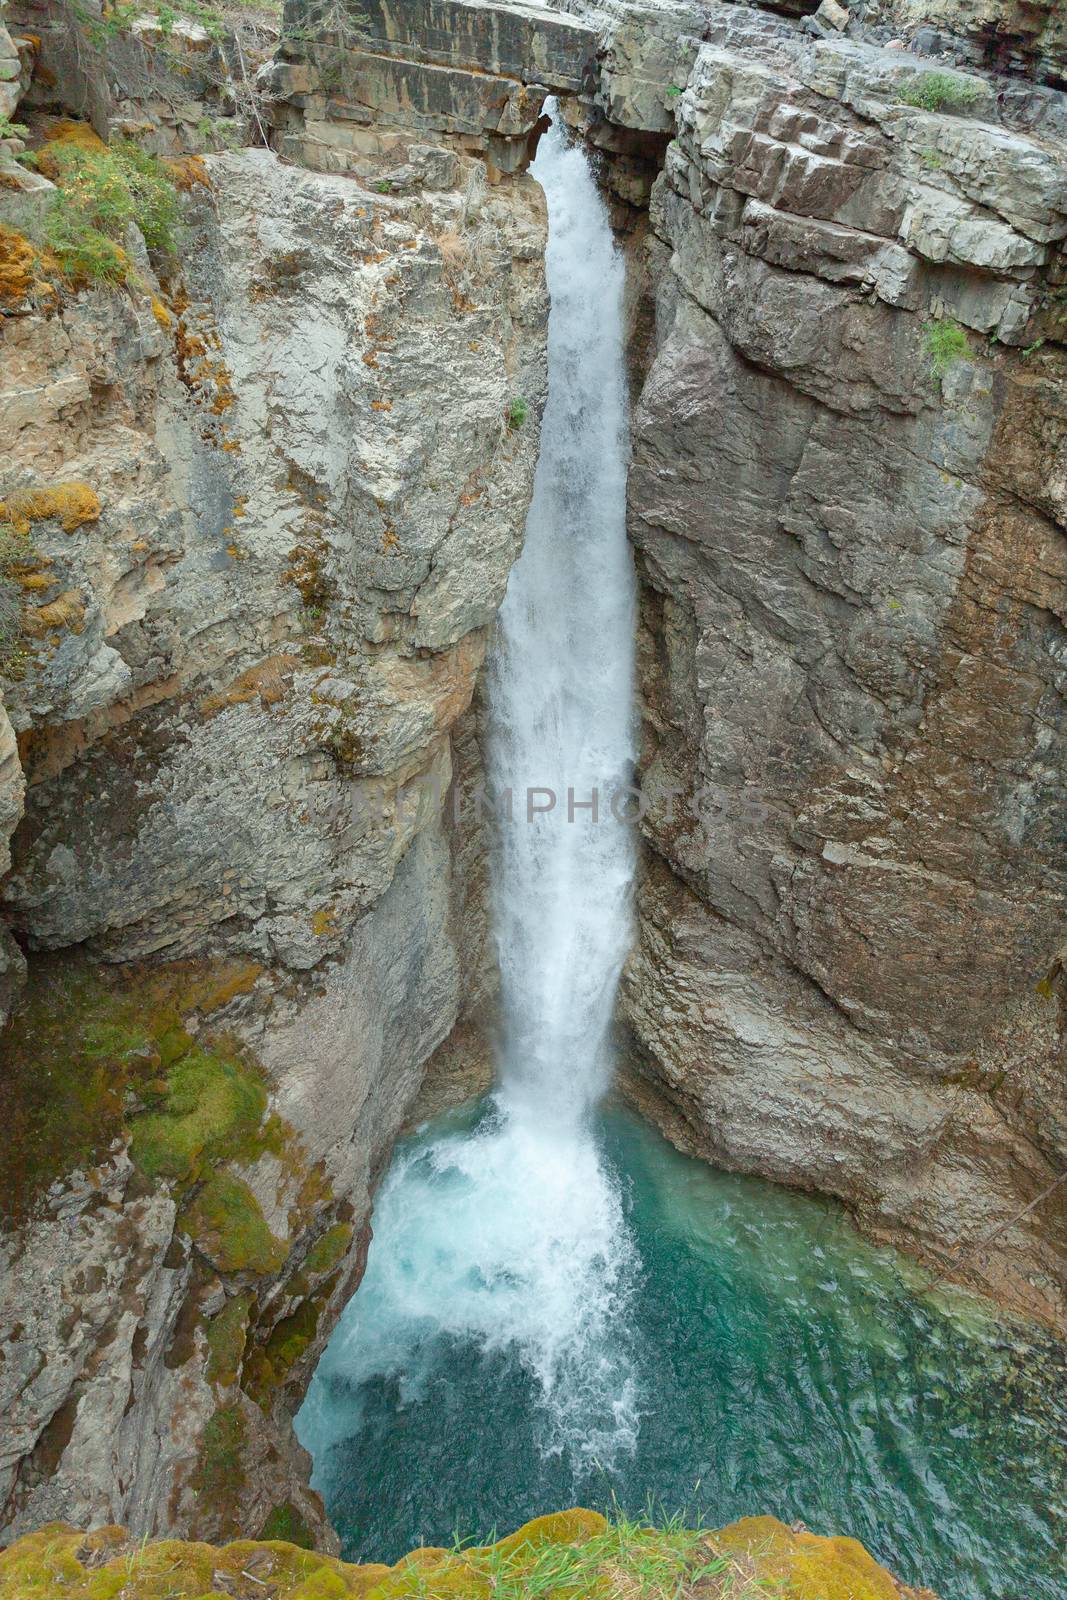 One of many waterfalls along Johnston Canyon trail, Alberta, Canada